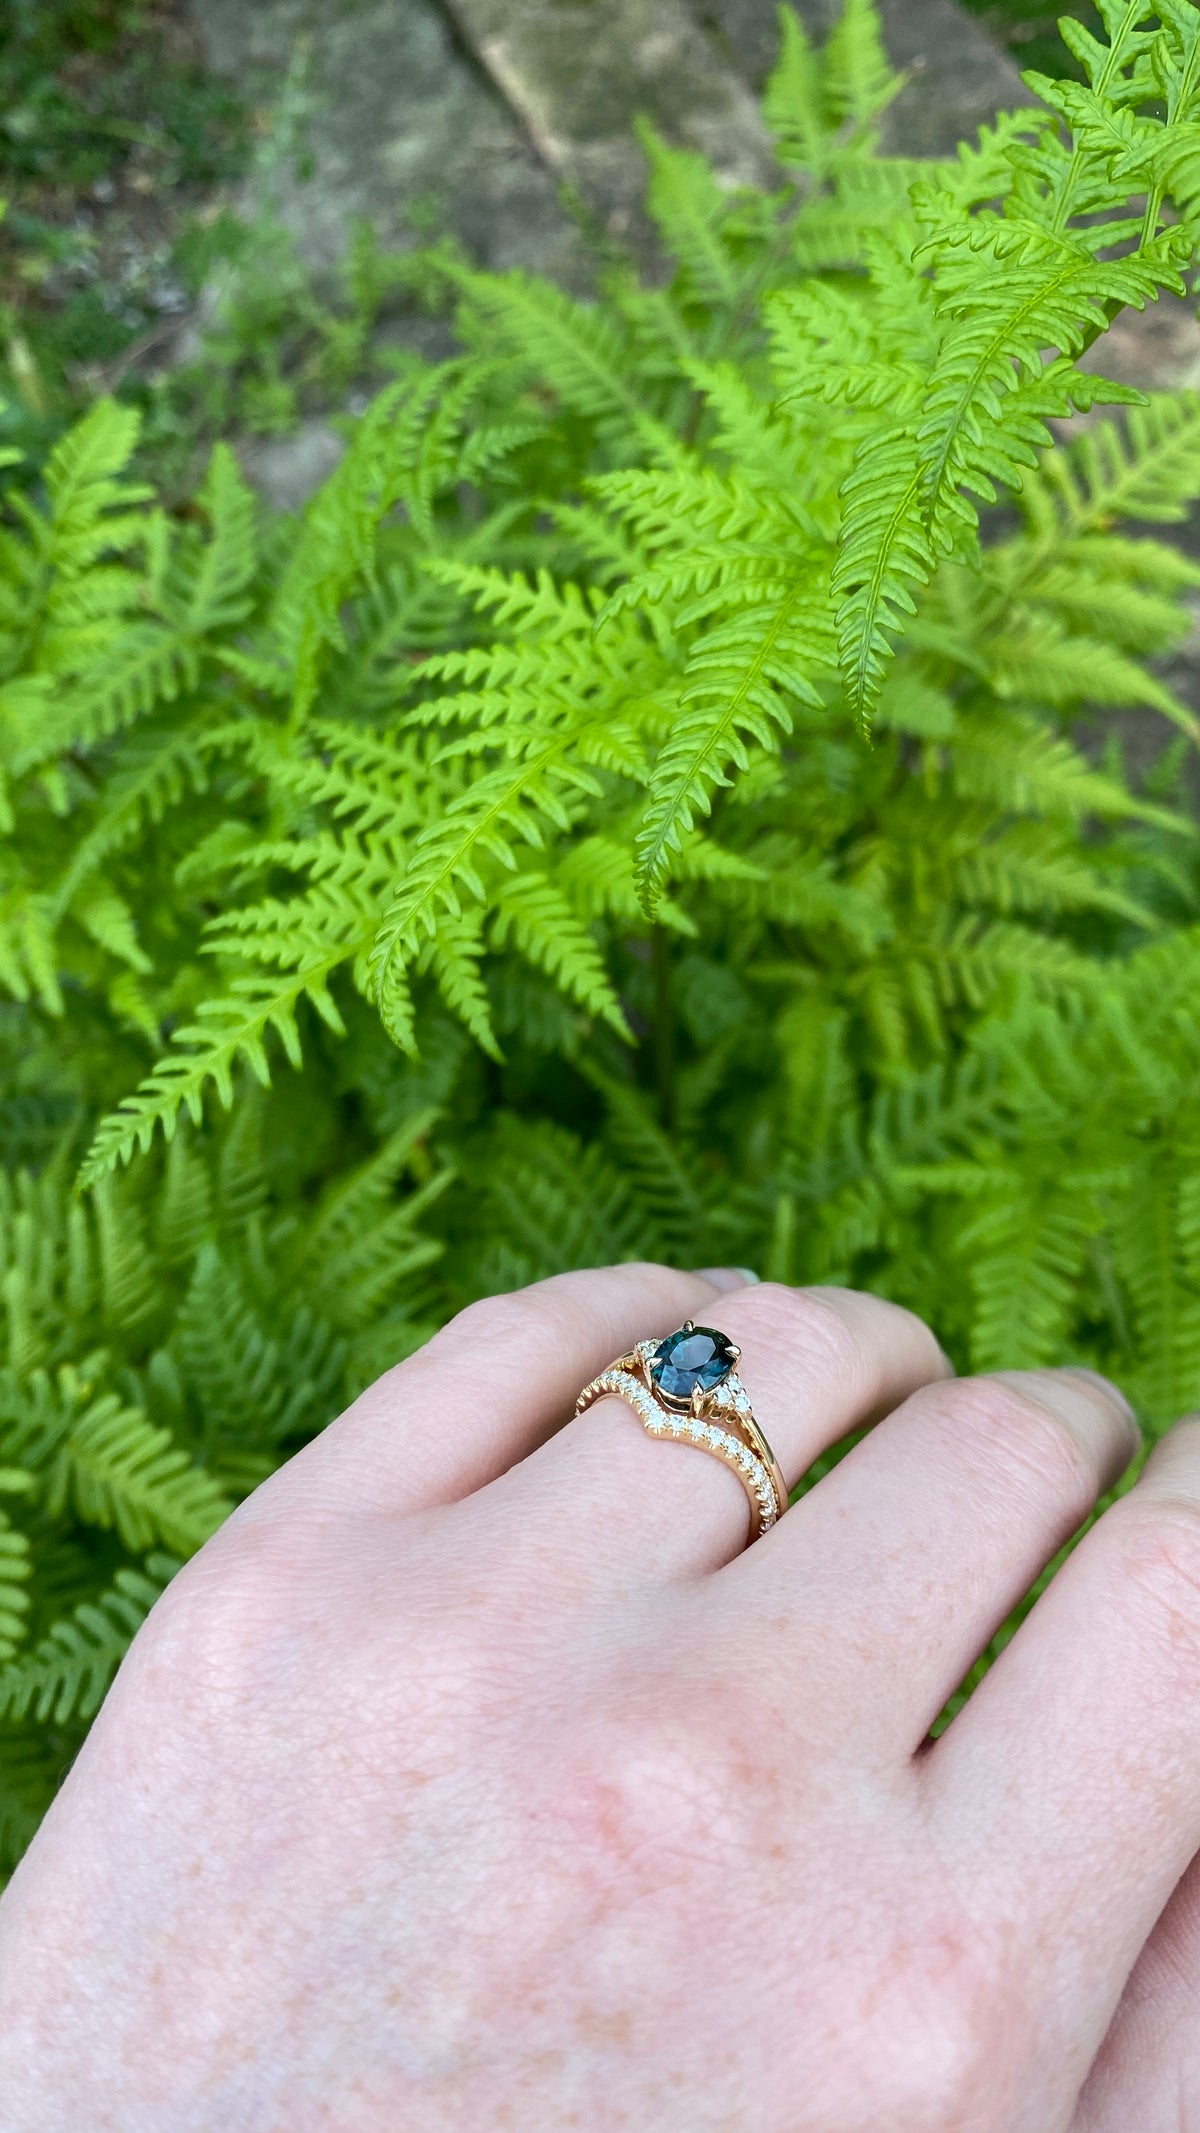 Diamond Peak Fitted Wedding Ring